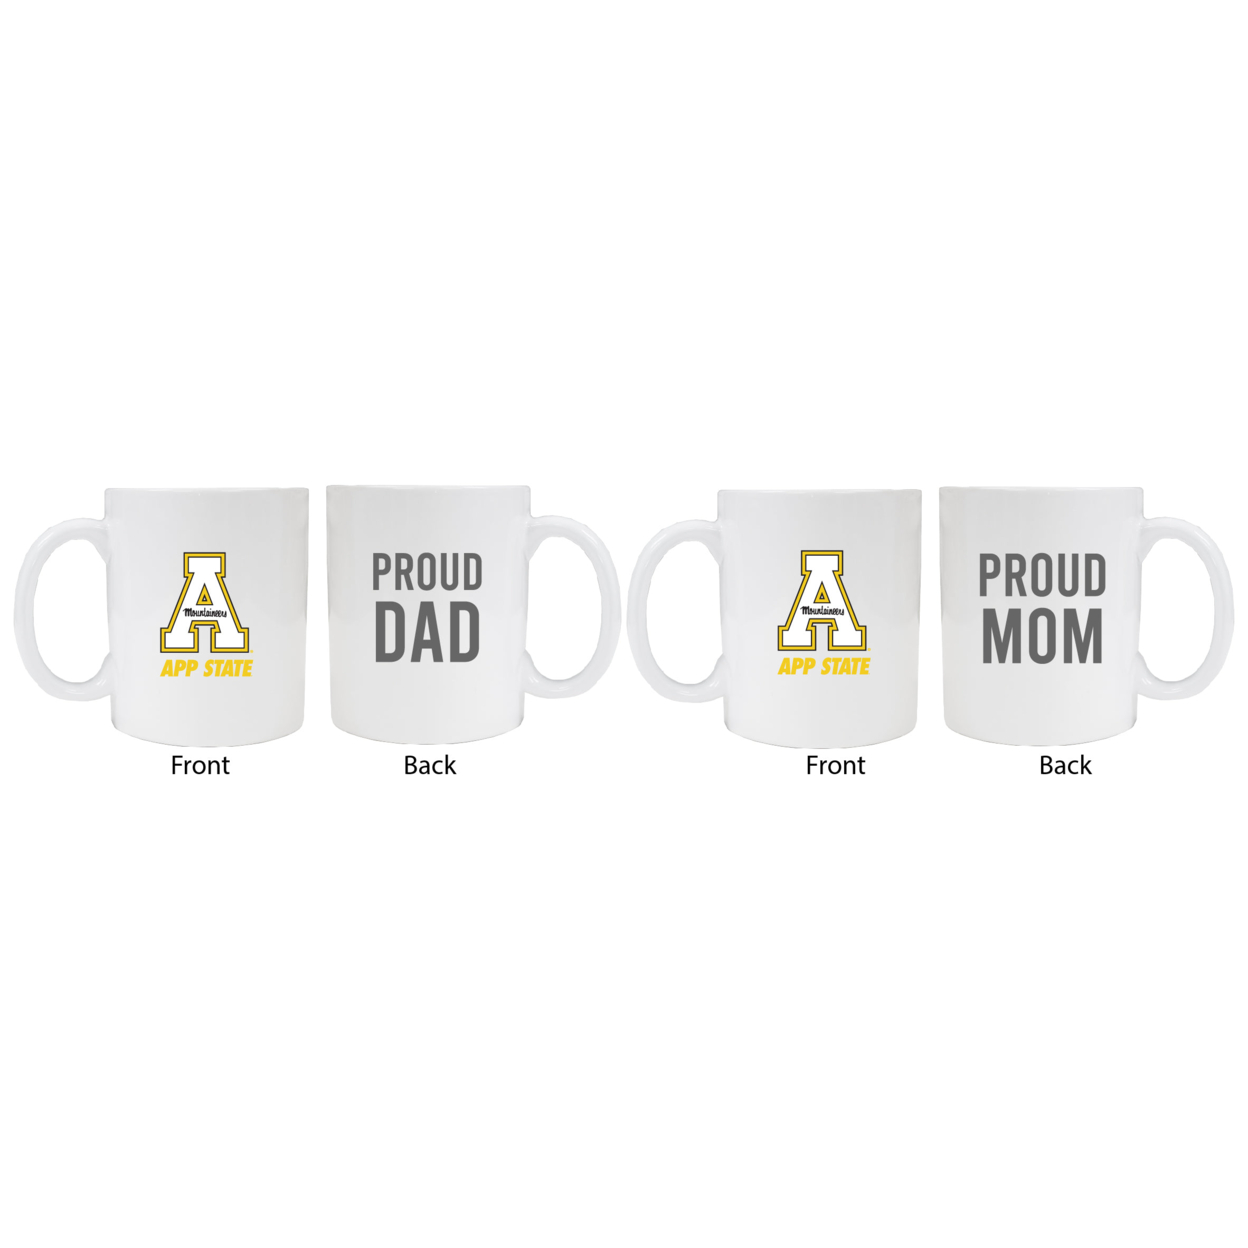 Appalachian State Proud Mom And Dad White Ceramic Coffee Mug 2 Pack (White).